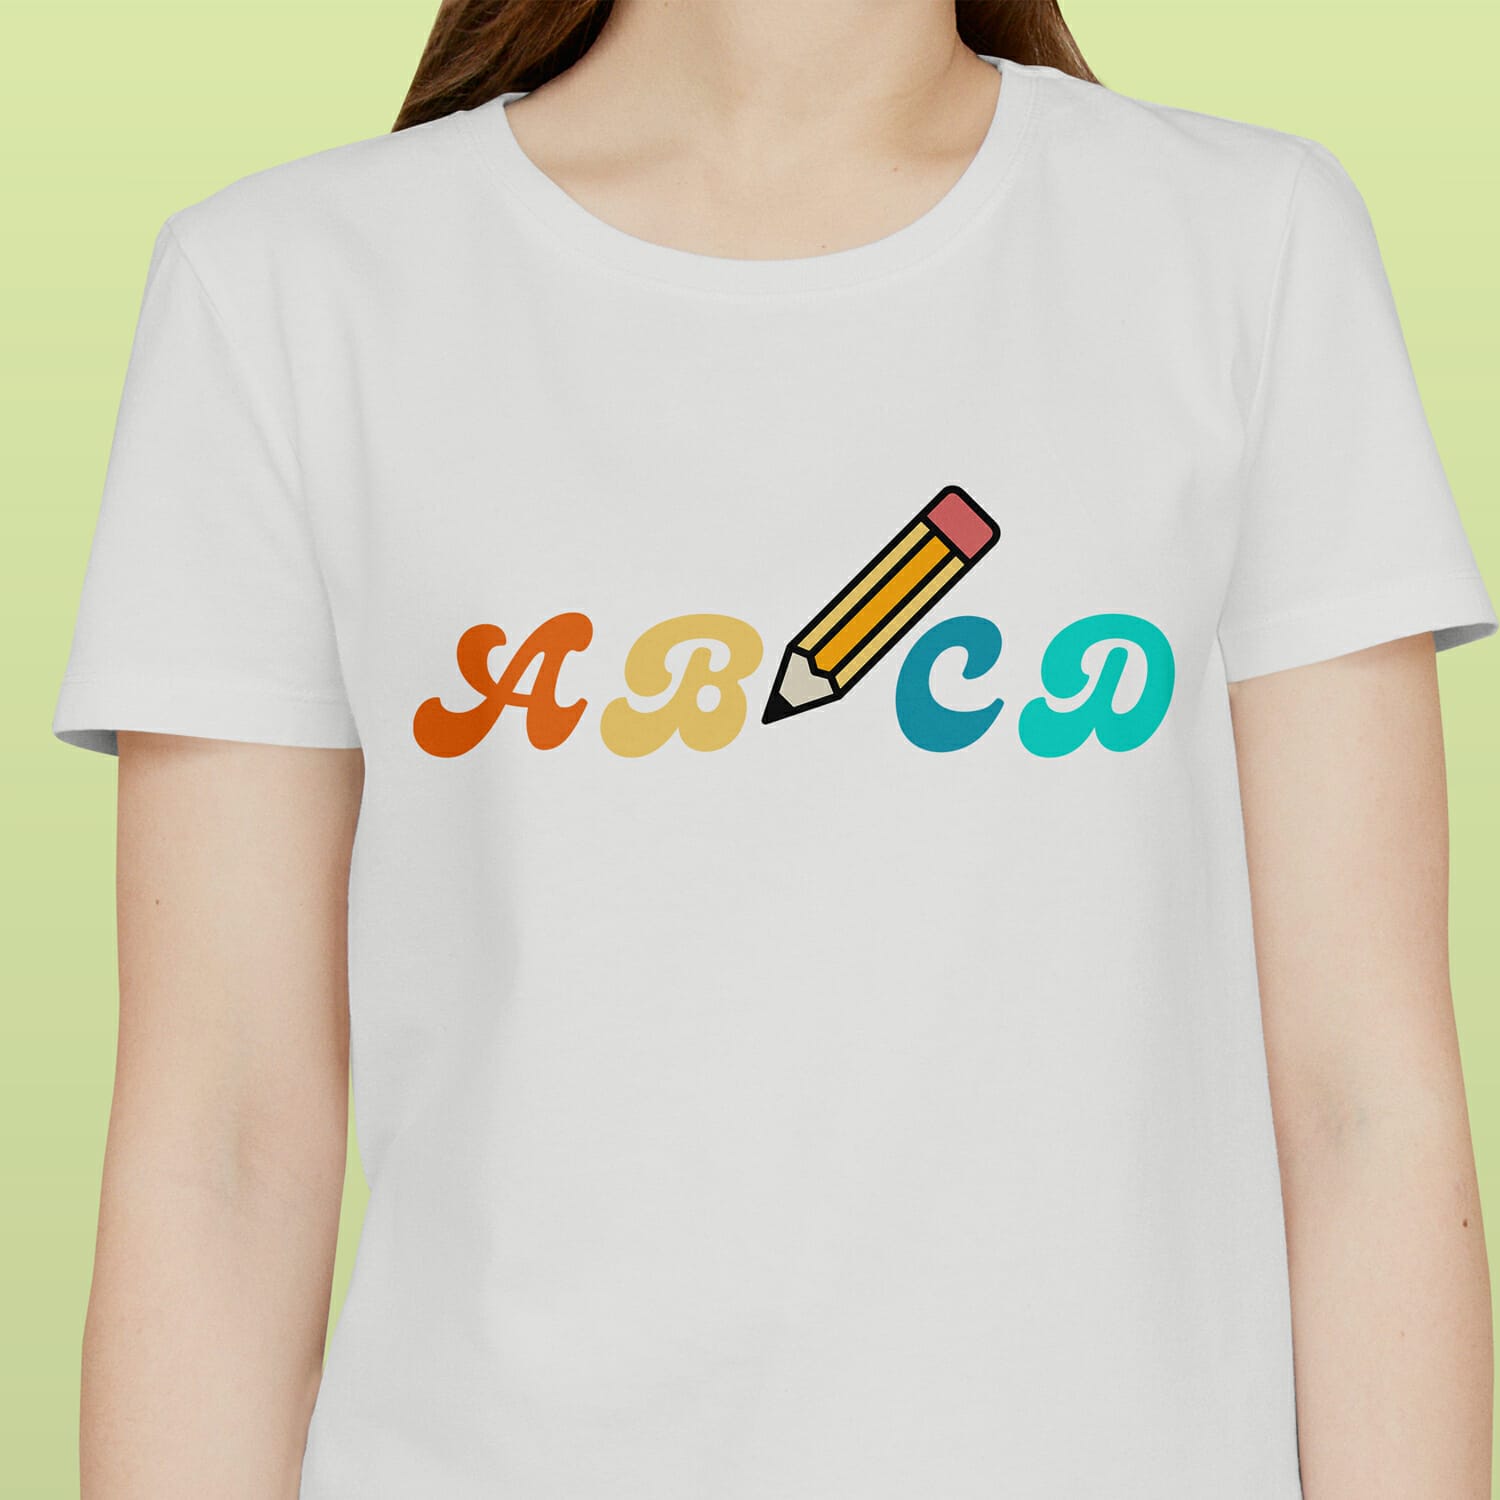 ABCD T-shirt Design for Teacher